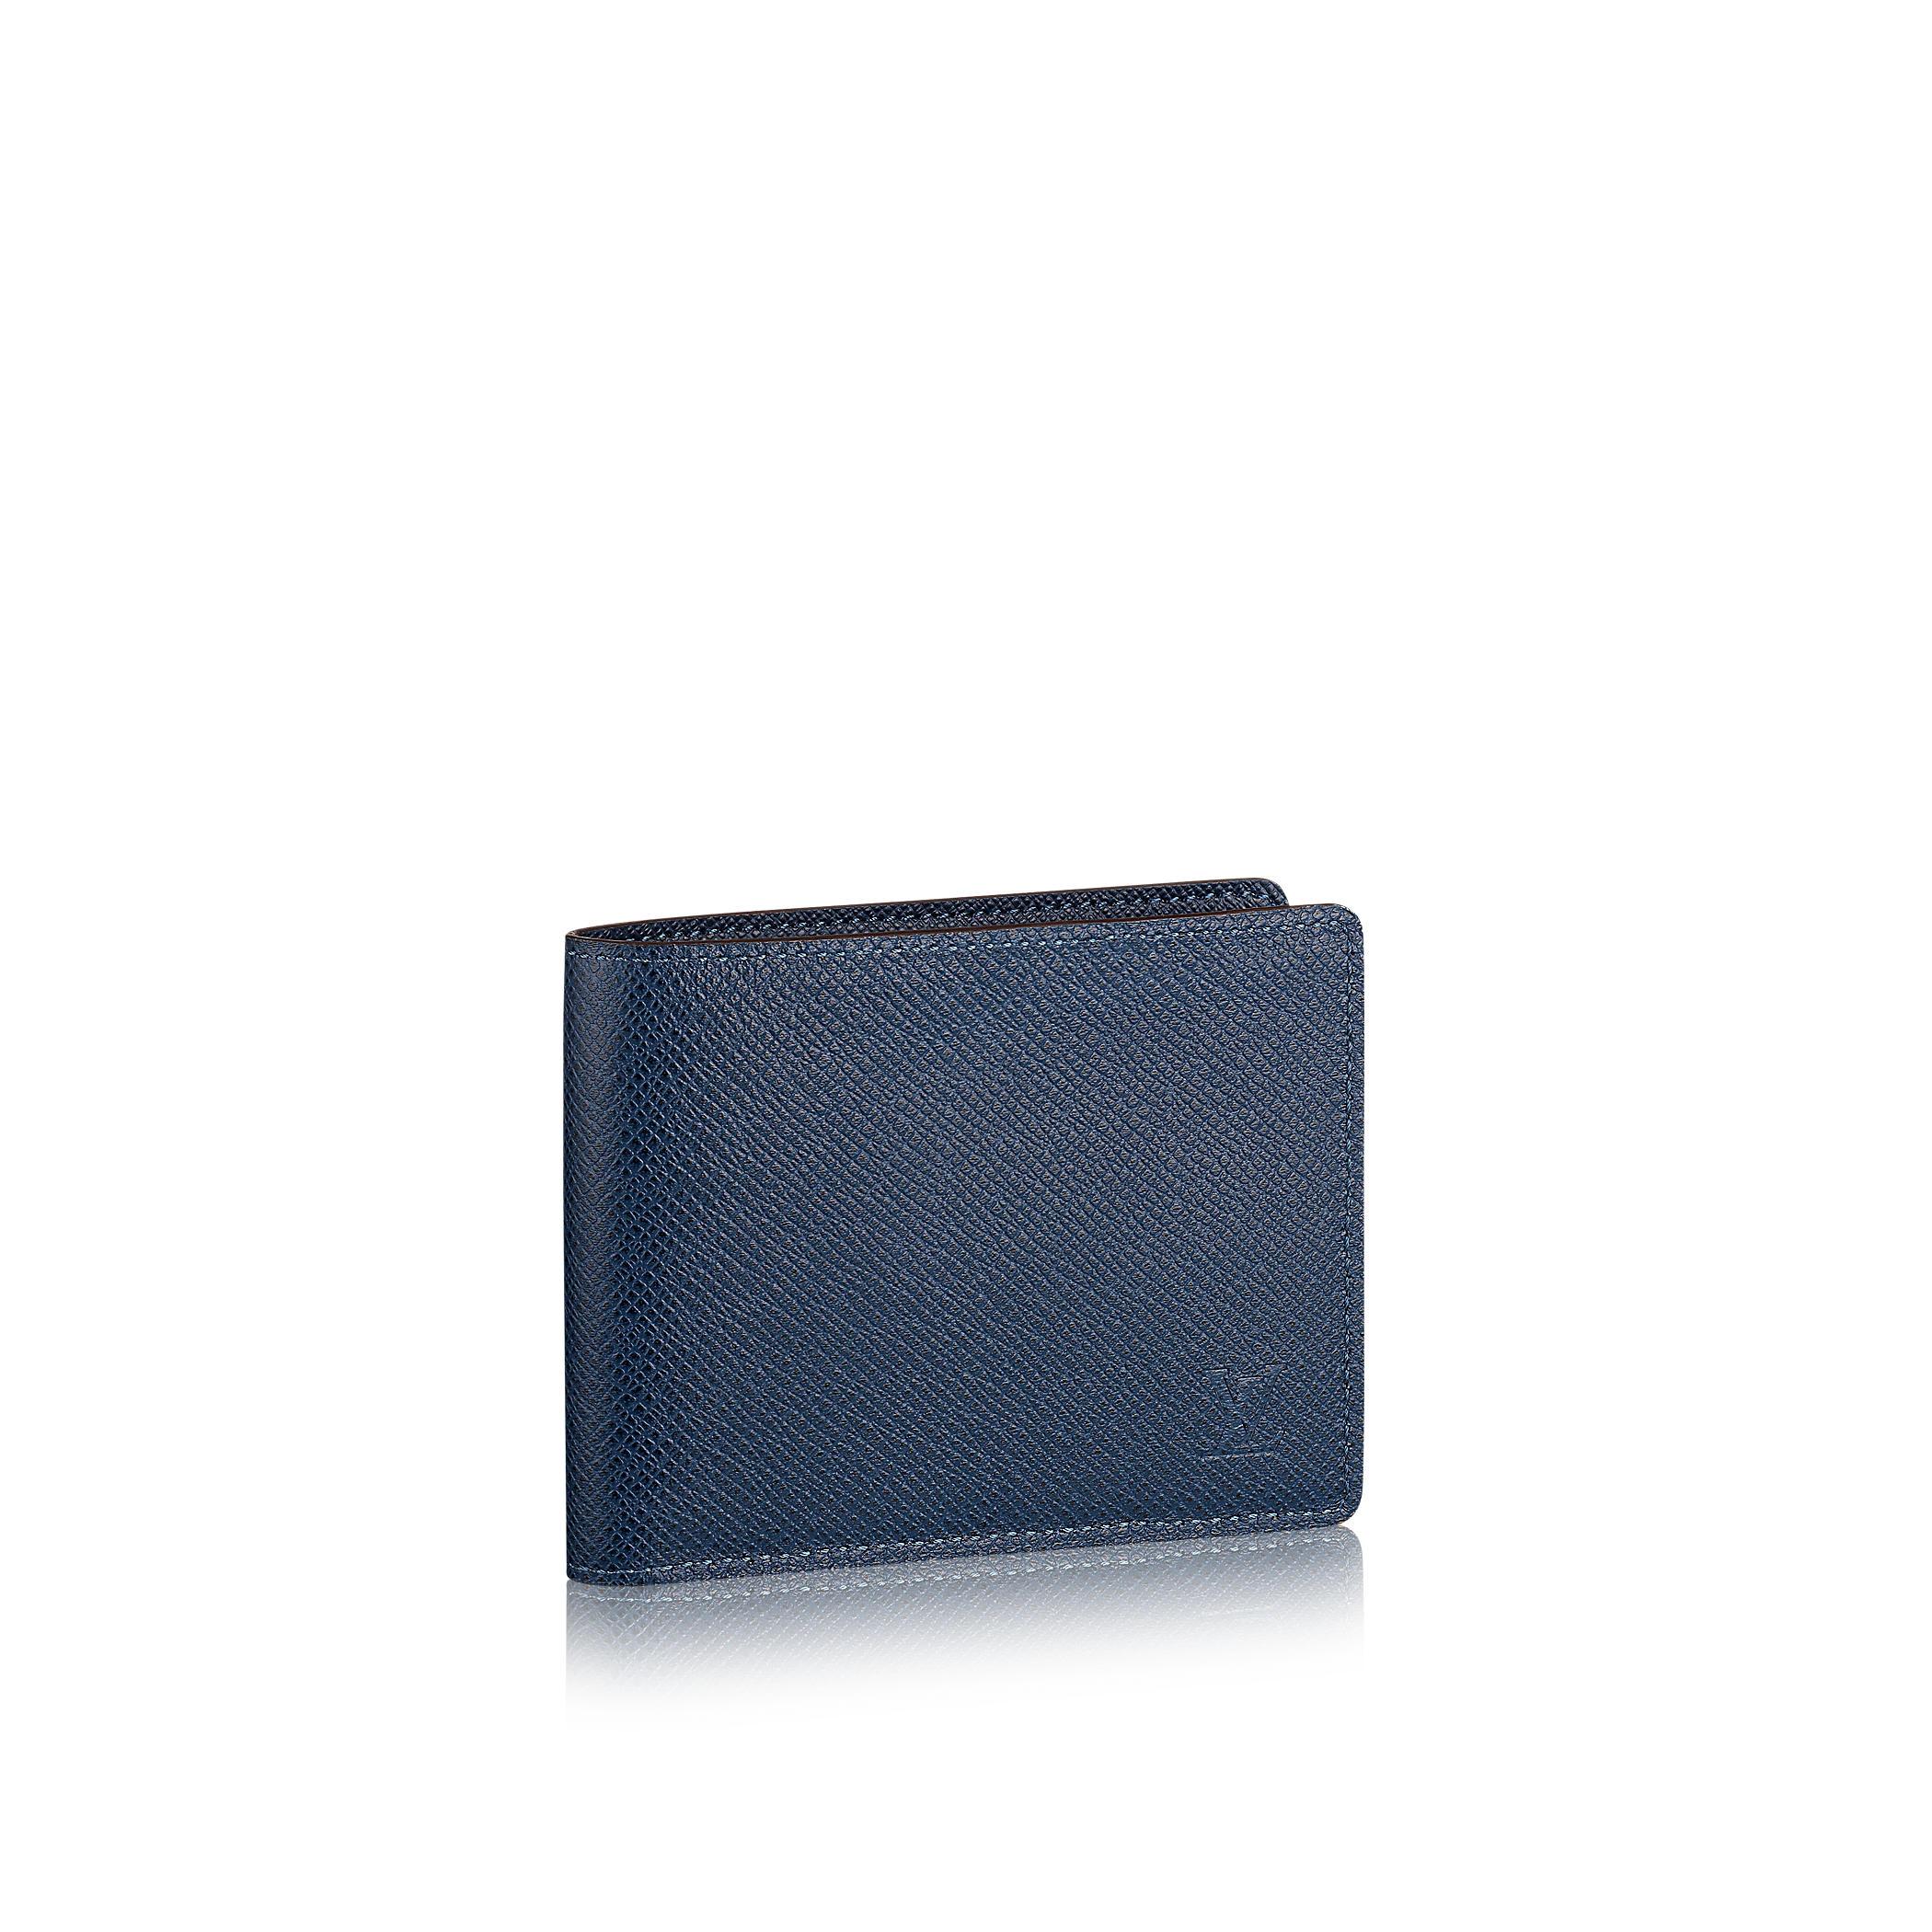 Louis vuitton Slender Wallet in Blue for Men - Save 12% | Lyst